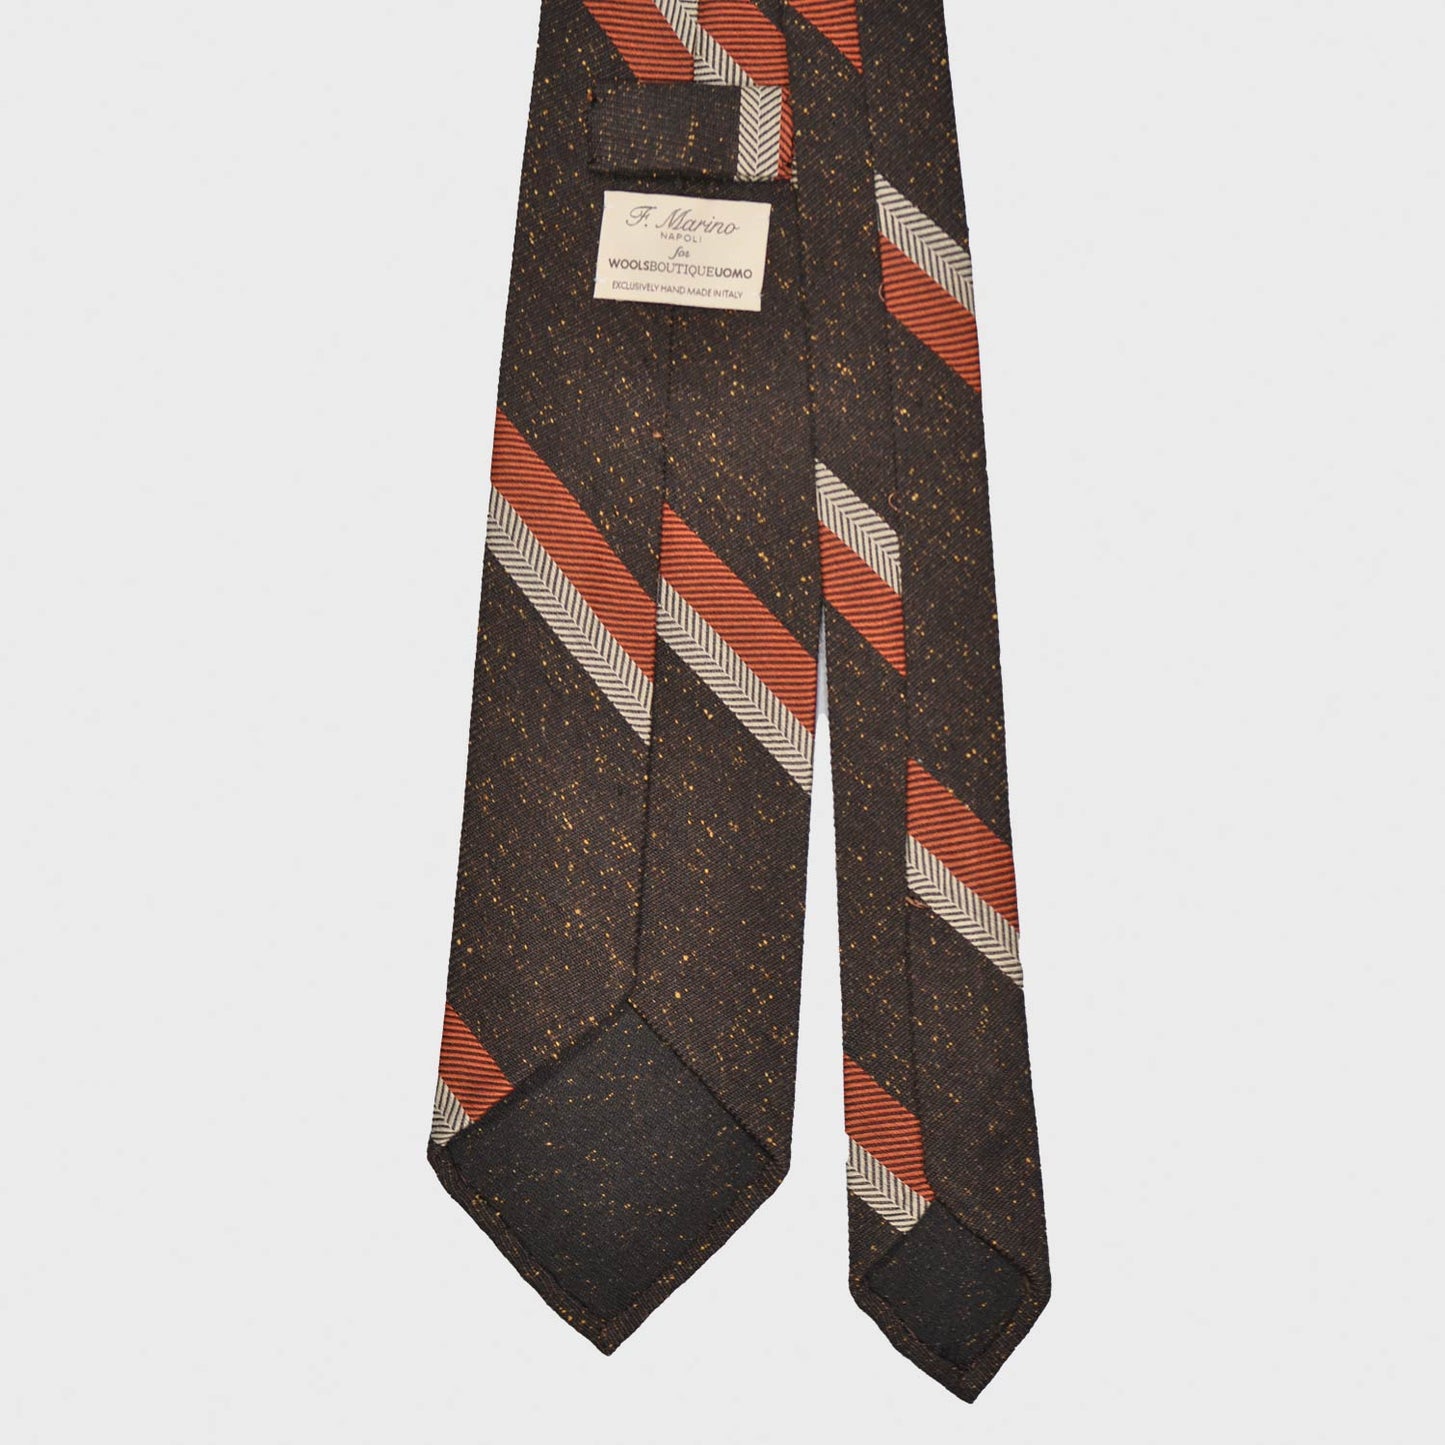 Donegal Brown Silk Wool Striped Tie. Refined regimental grenadine necktie made with silk and wool